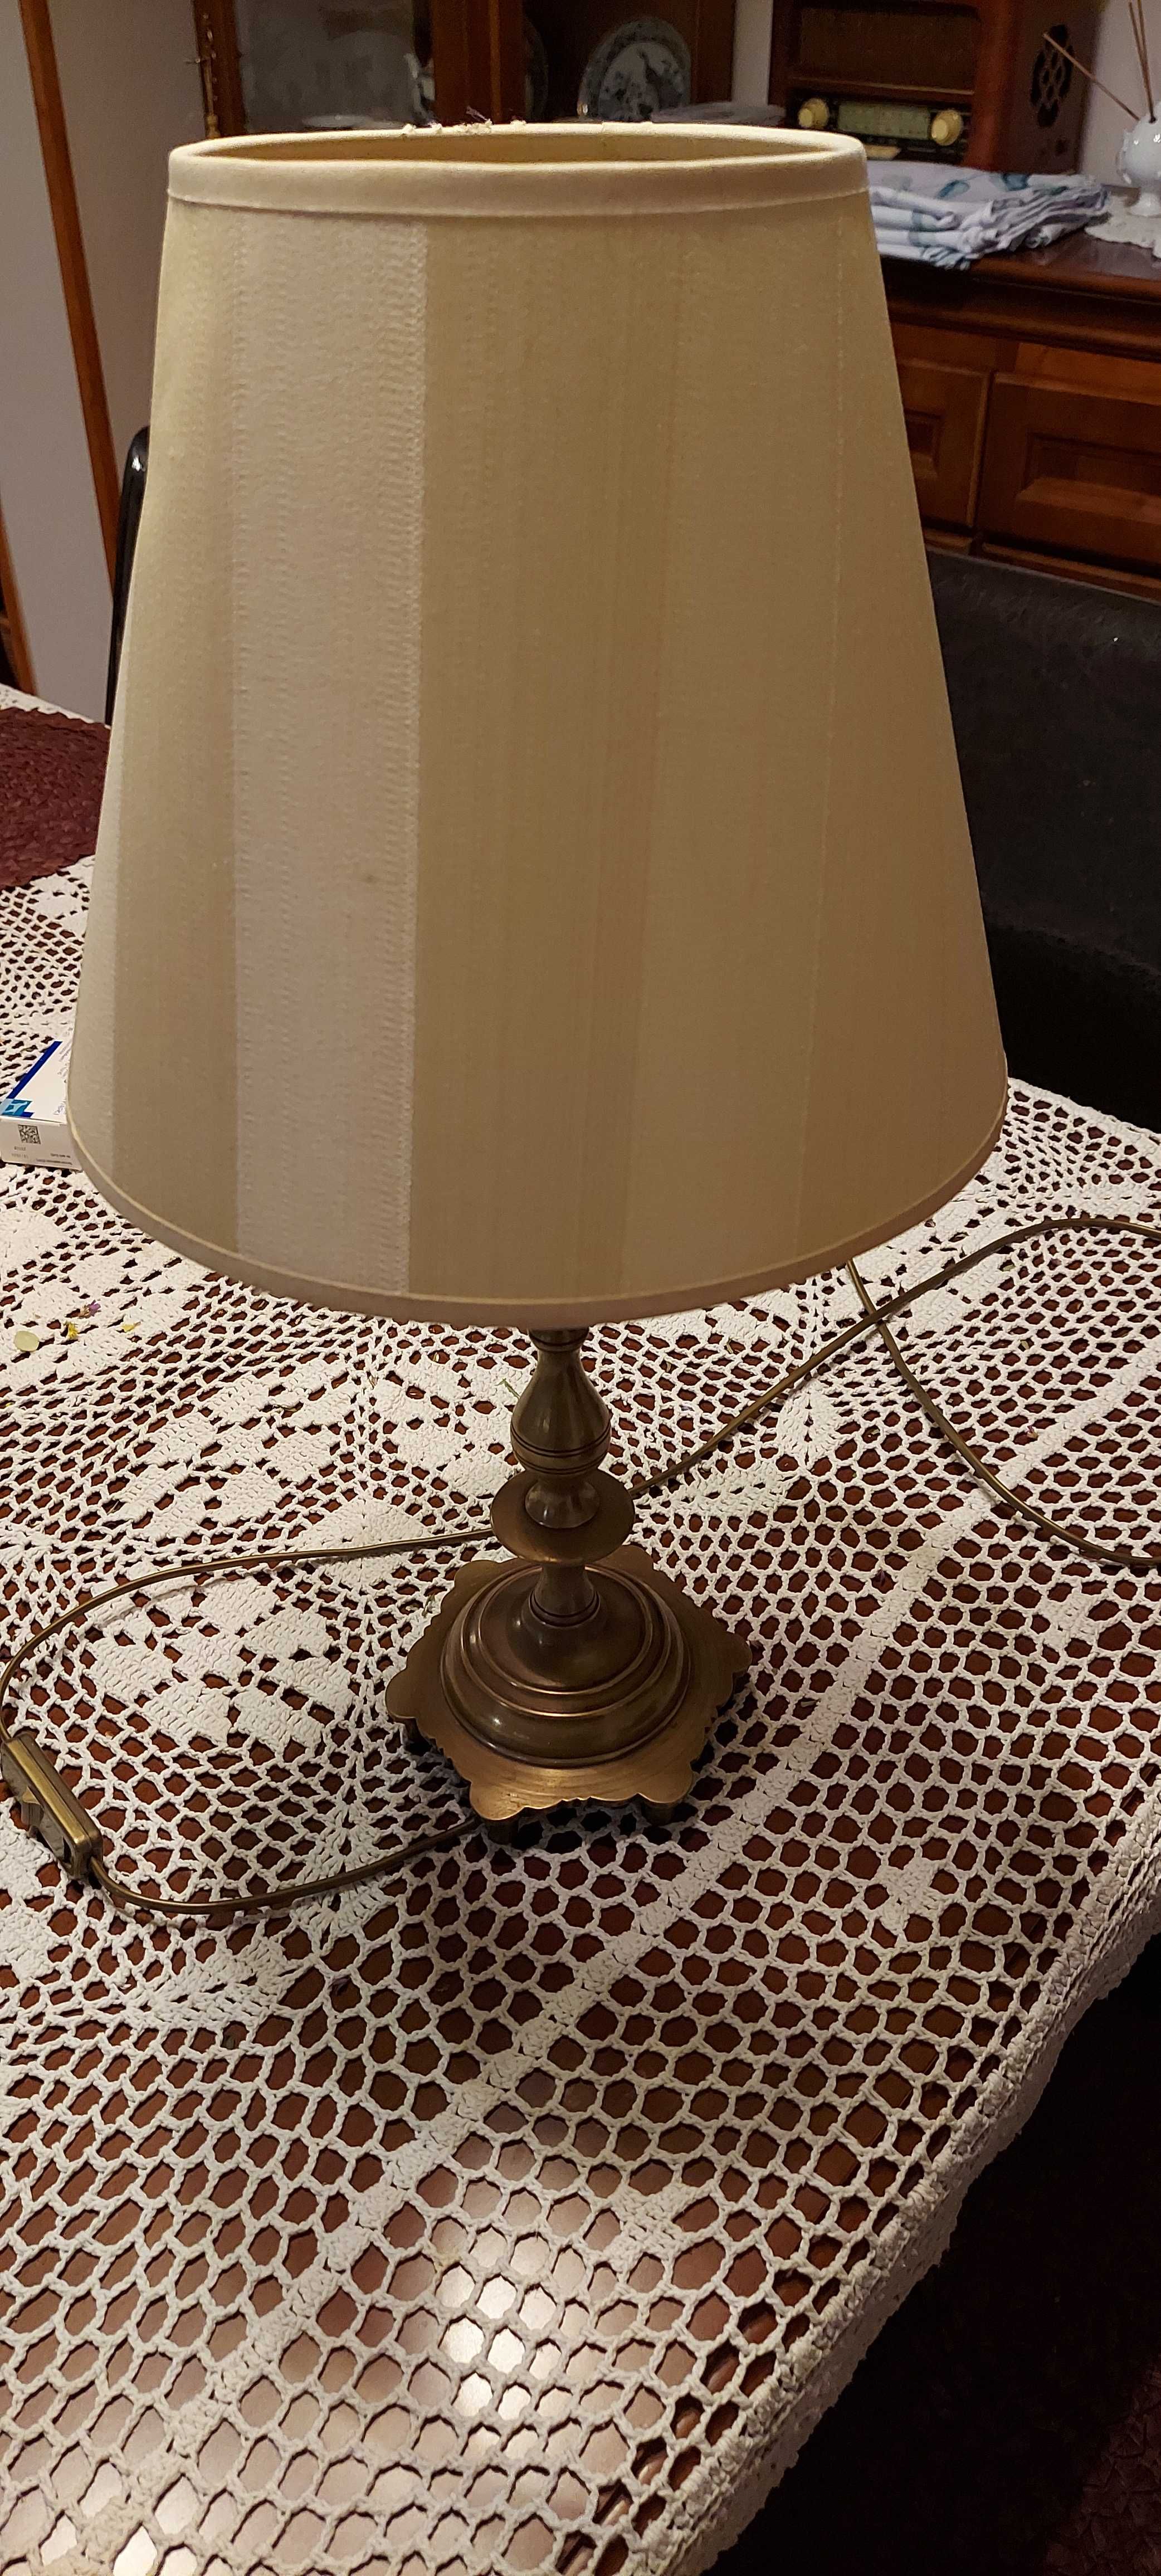 Lampa z mosiądzu